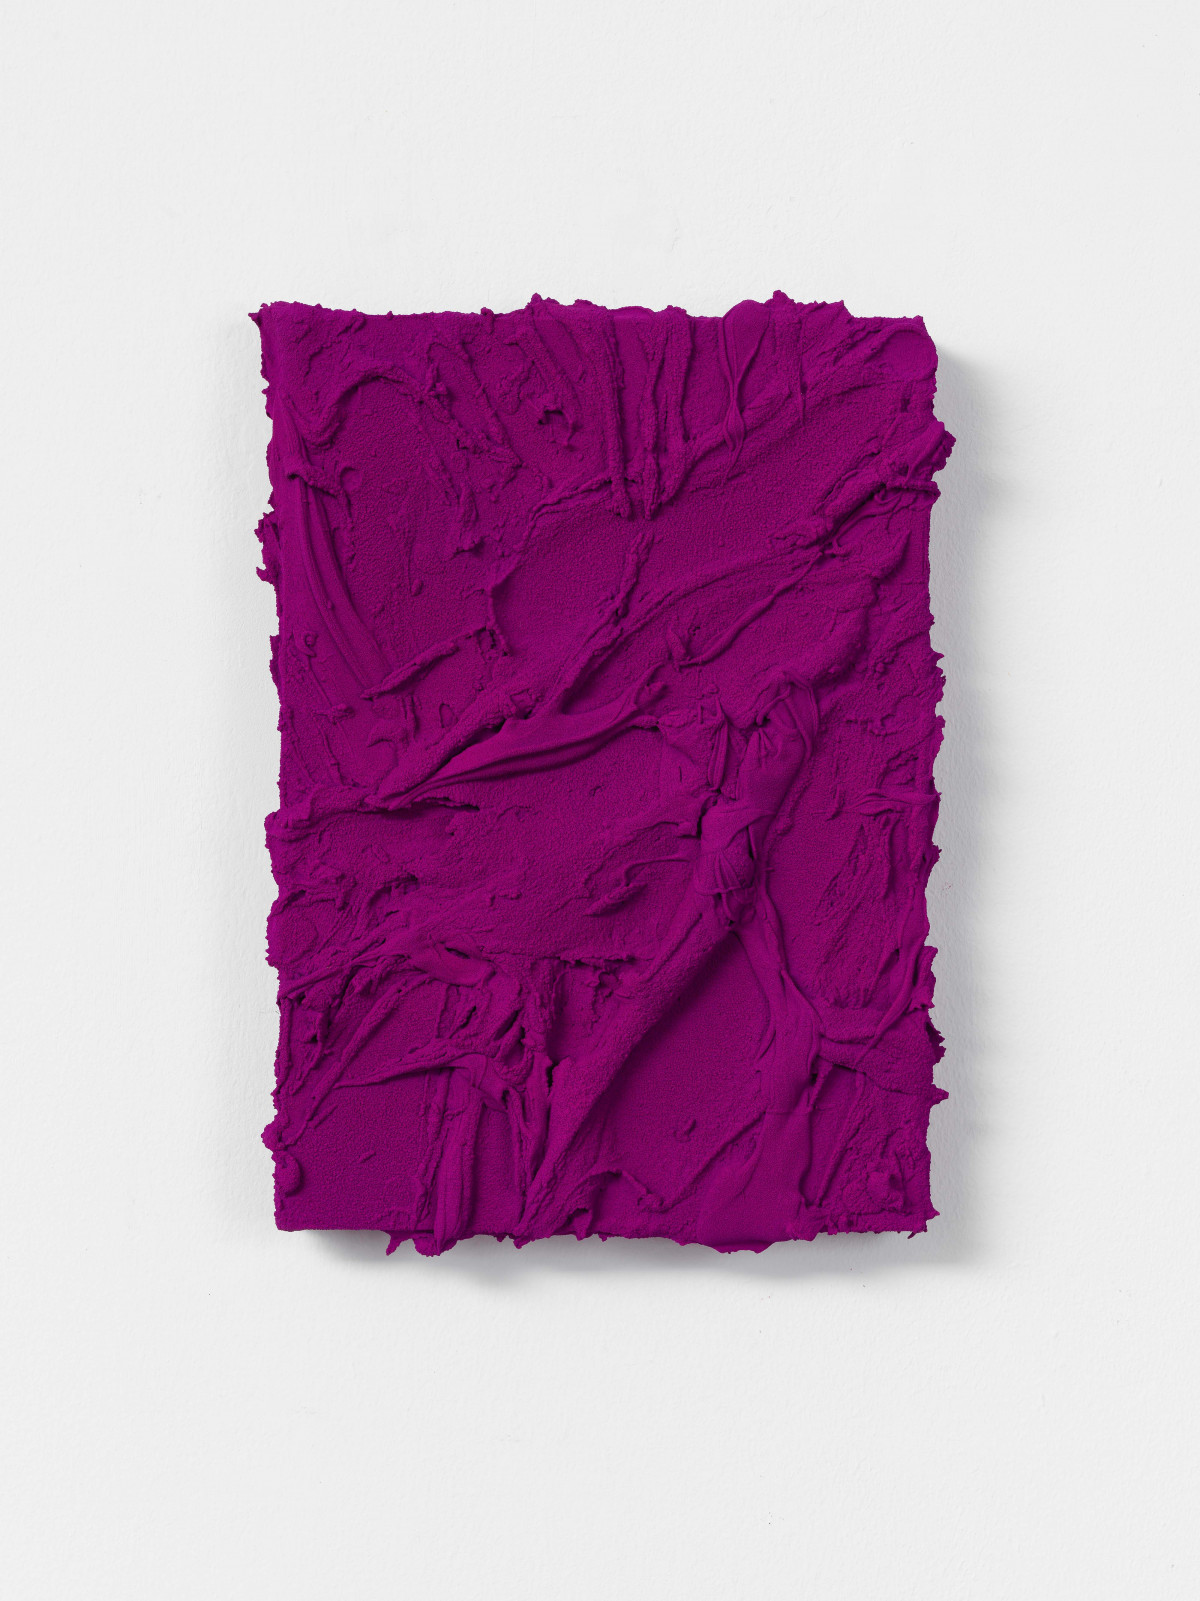 Jason Martin, ‘Untitled (Fluorescent violet)’, 2021